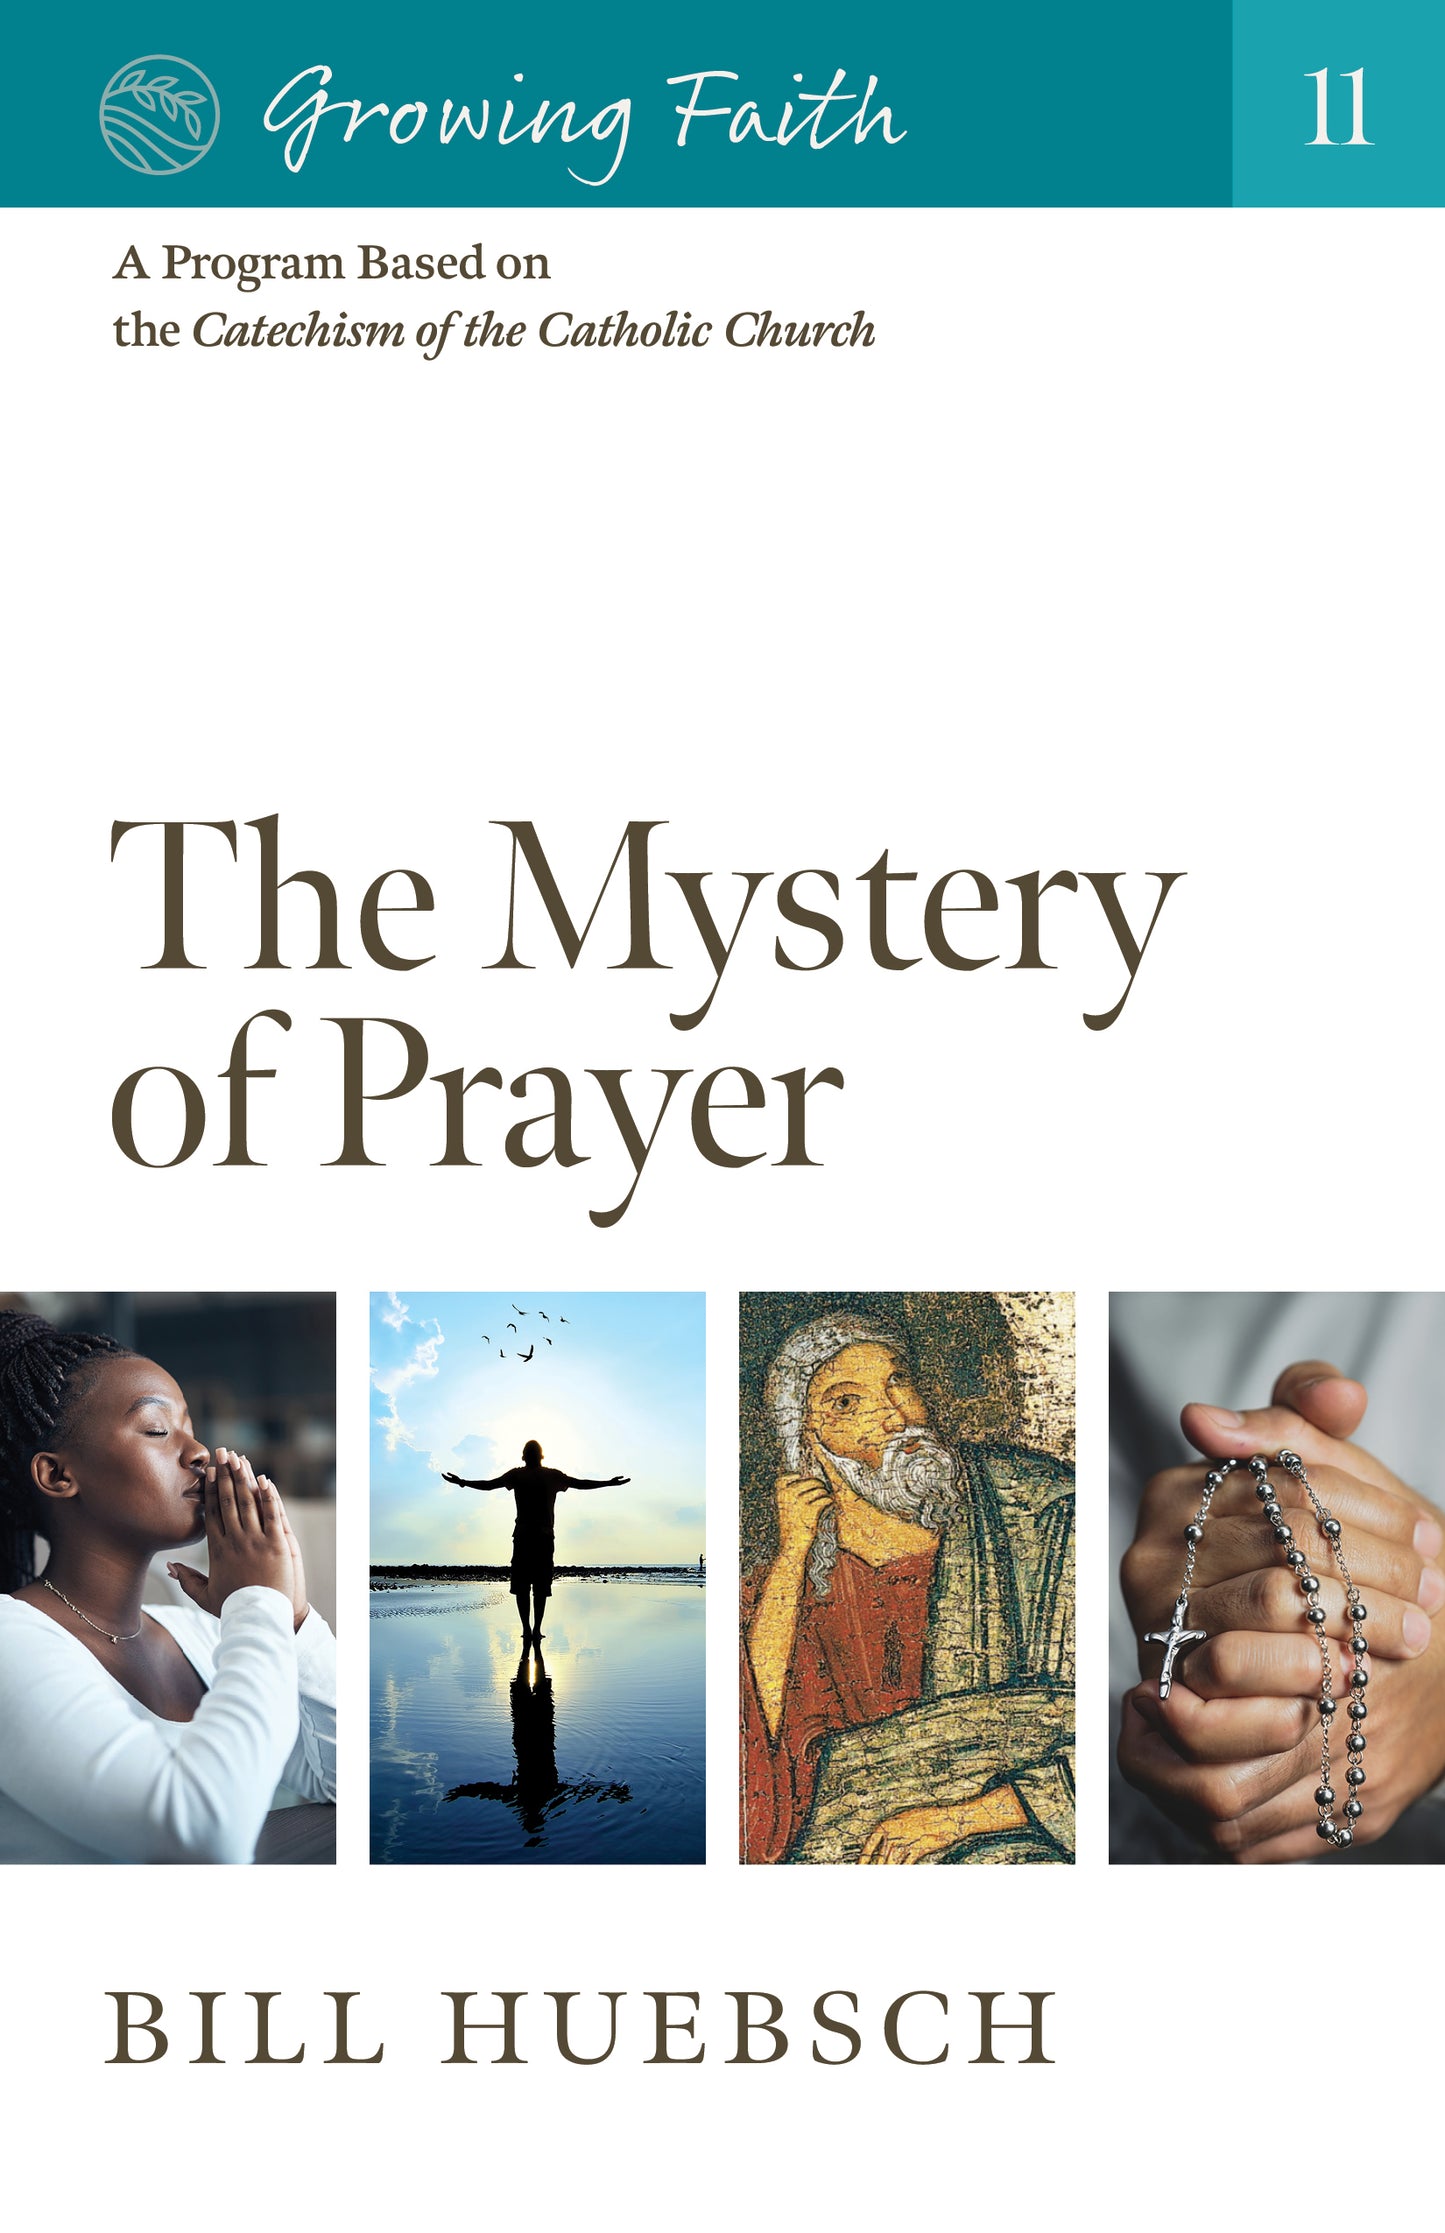 Growing Faith: The Mystery of Prayer – Twenty-Third Publications